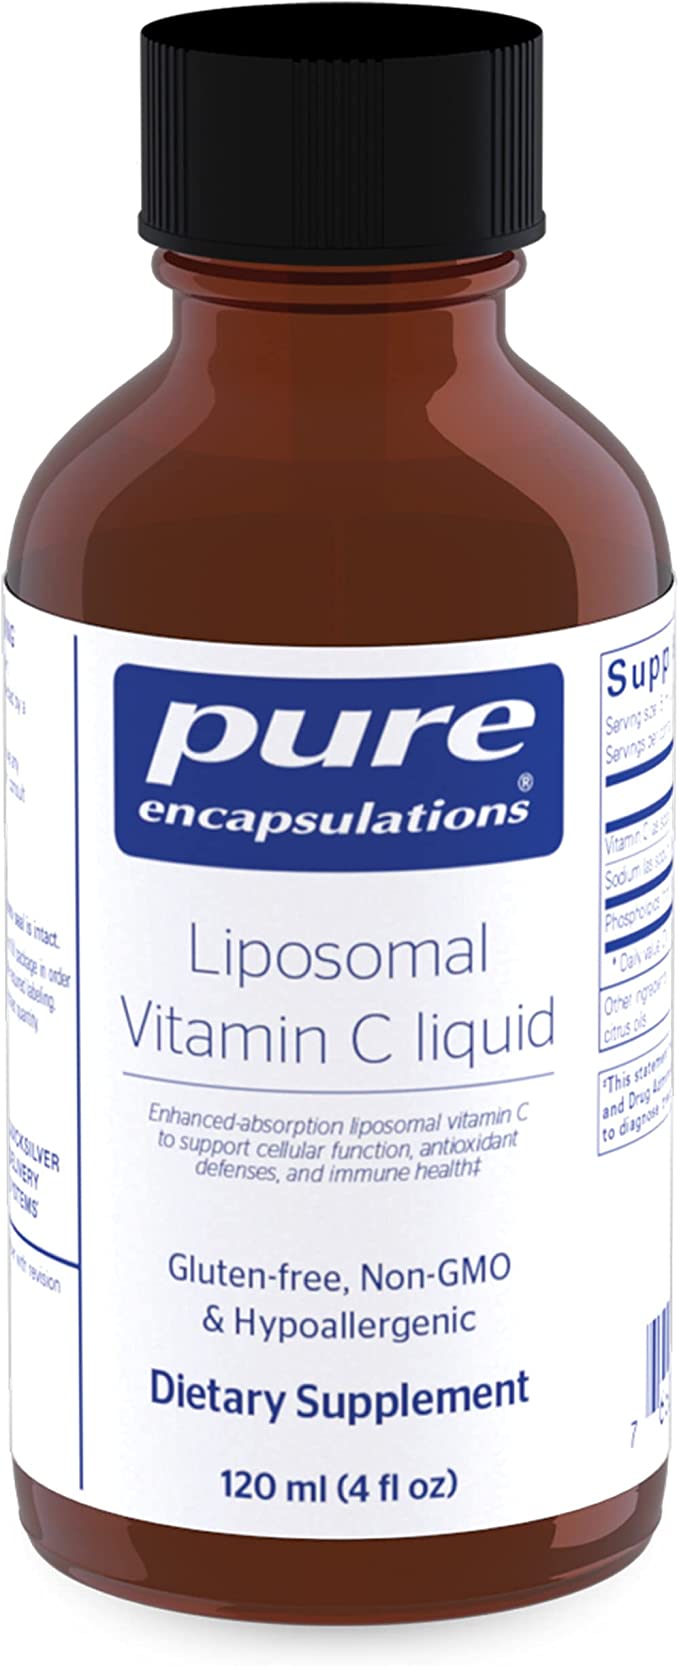 Liposomal Vitamin C liquid